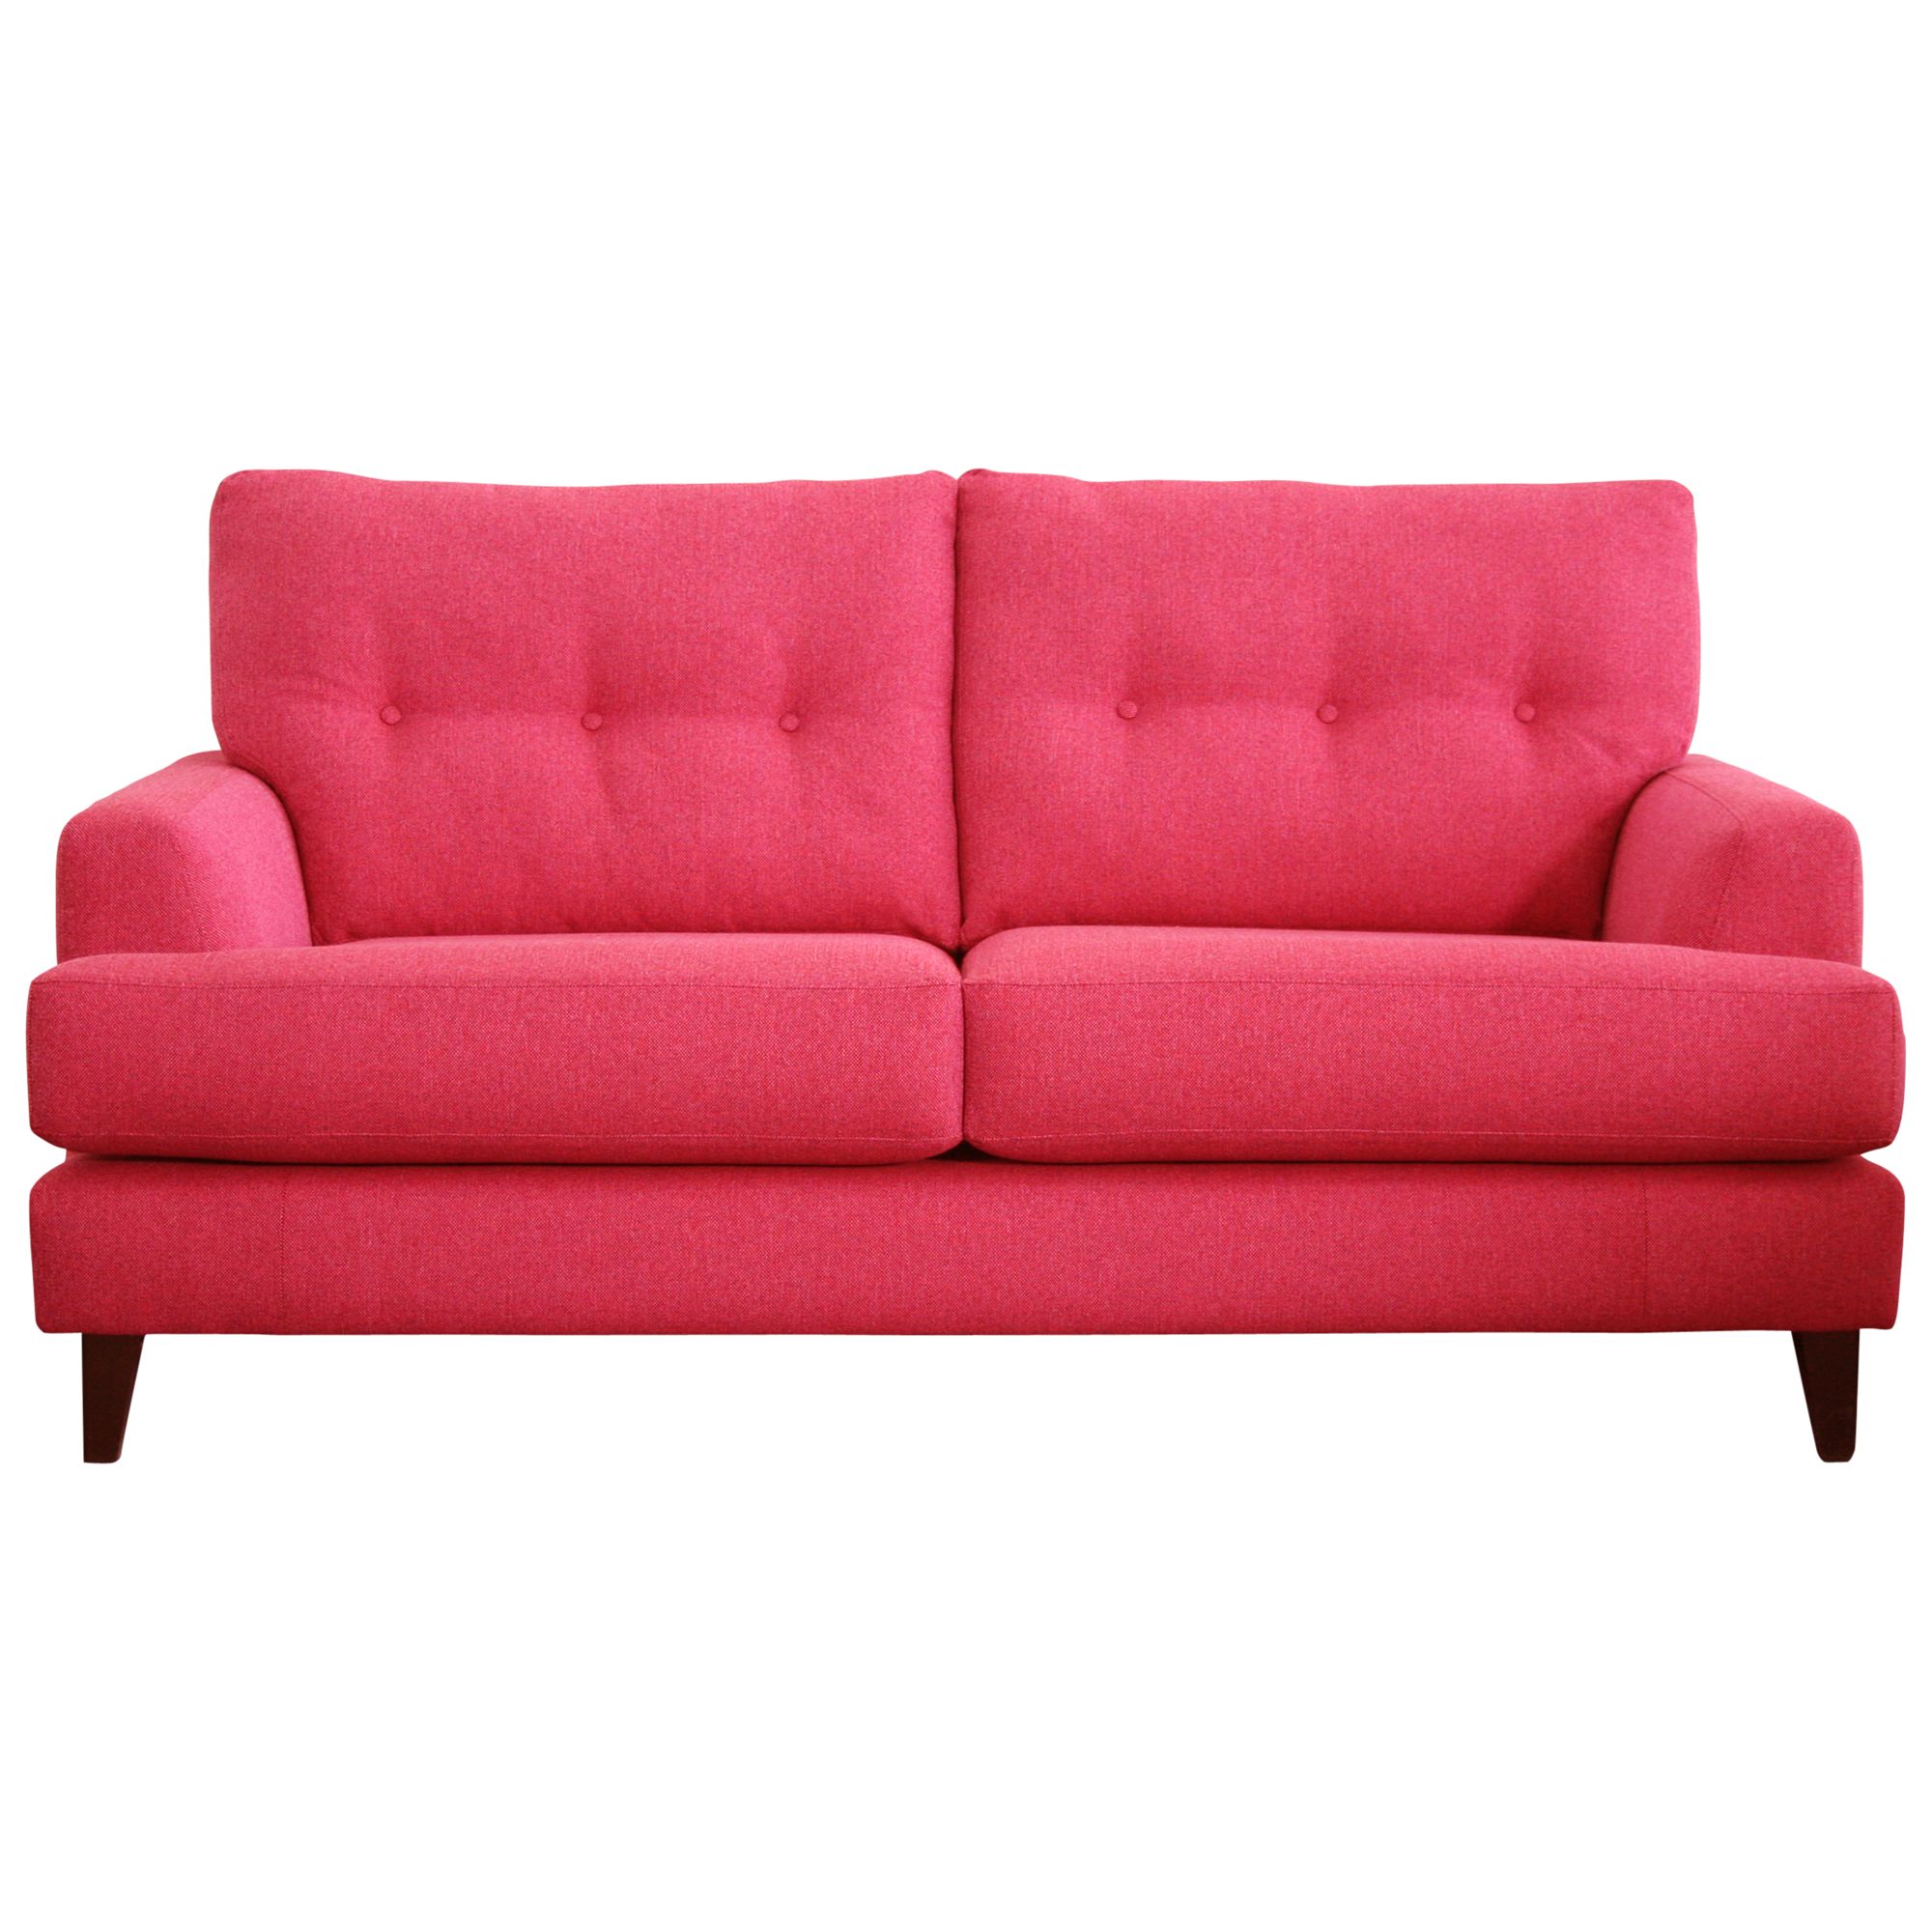 John Lewis Lainie Small Sofa, Fuchsia, width 165cm